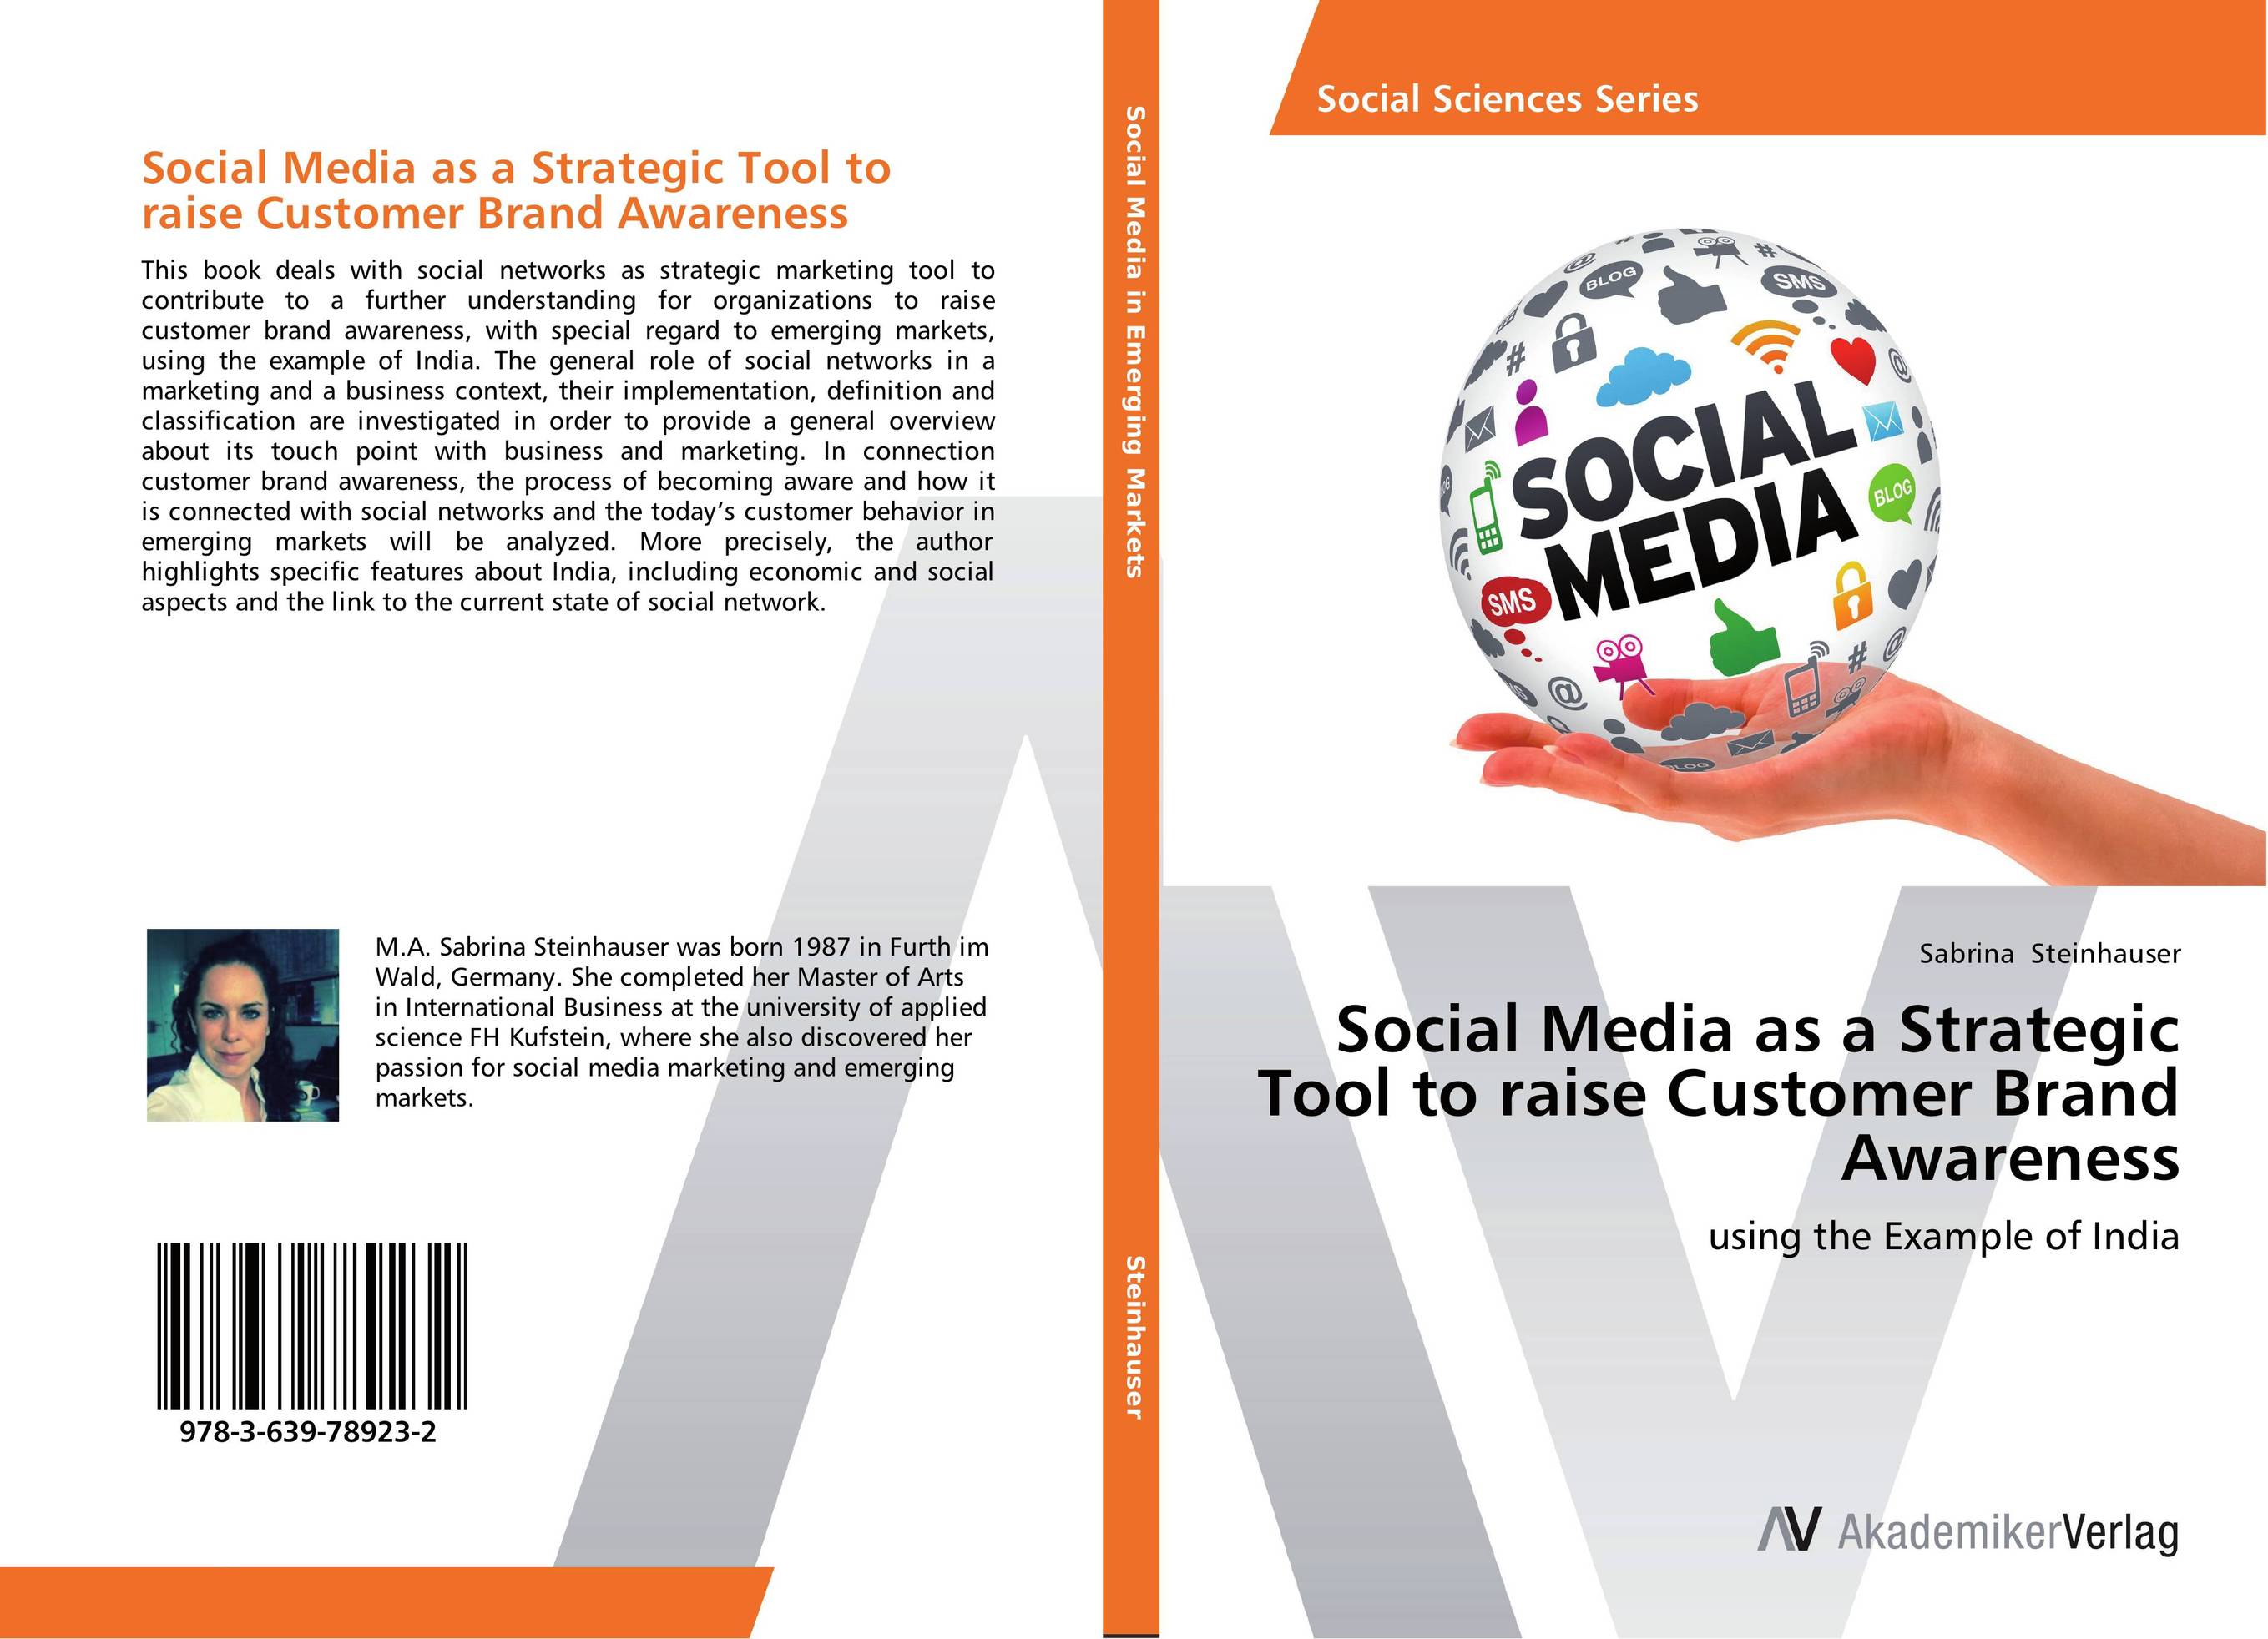 Social Media as a Strategic Tool to raise Customer Brand Awareness